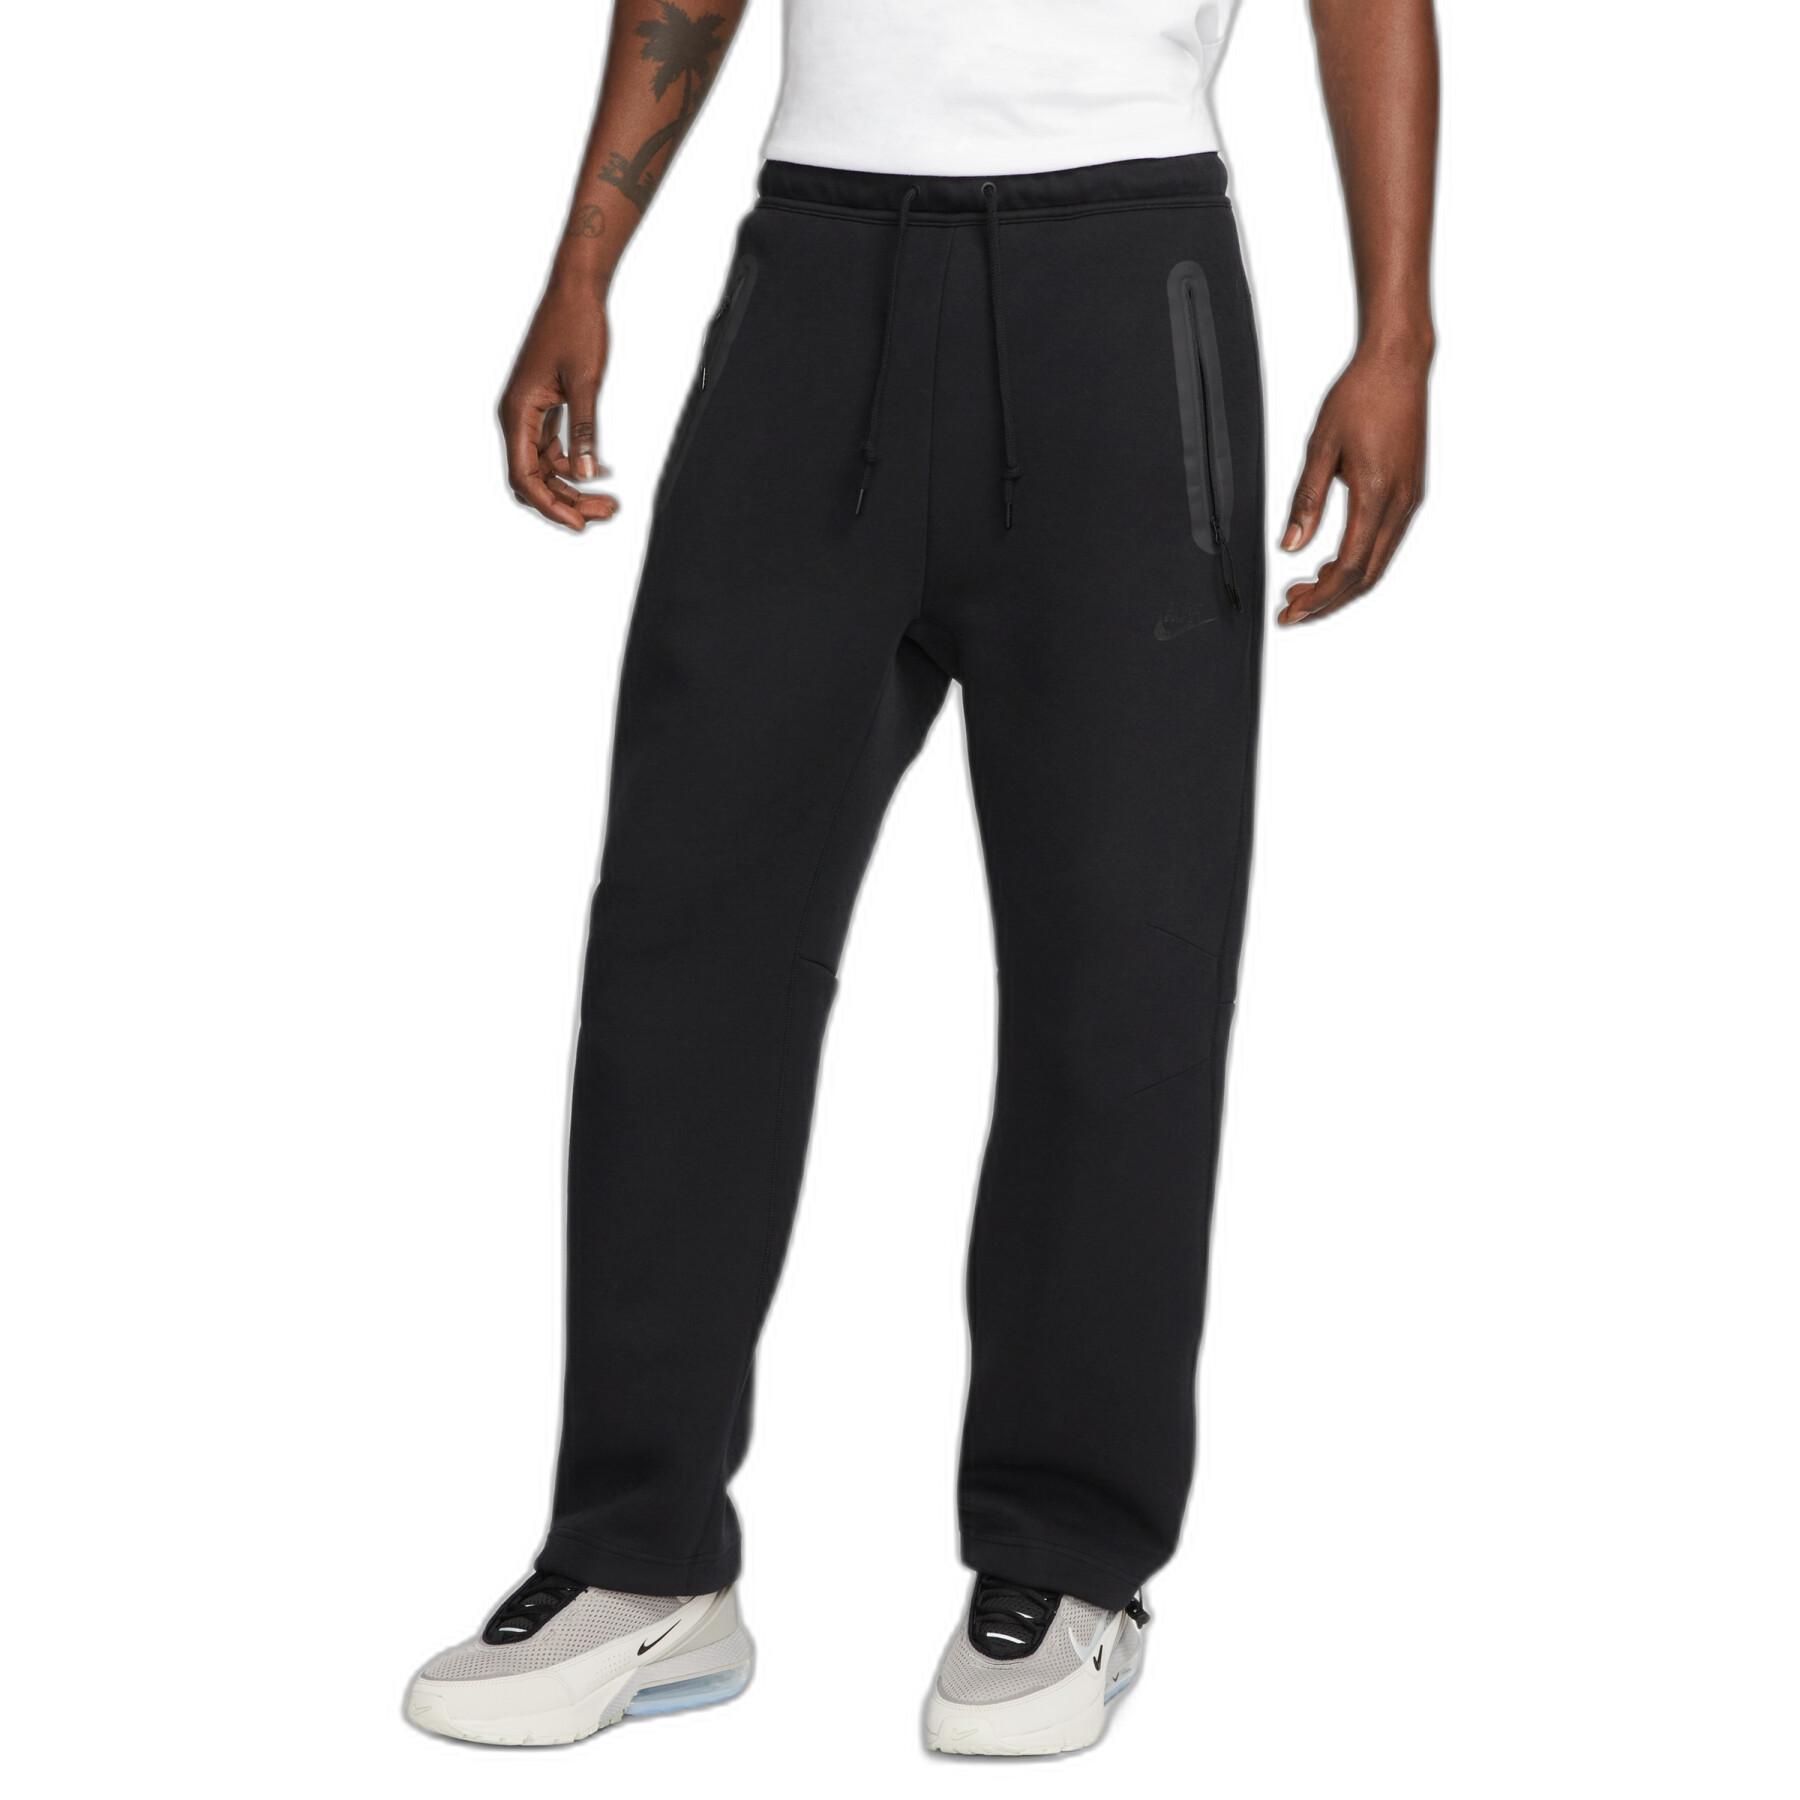 Jogging Nike Tech Fleece Open-Hem - Nike - Marques - Textile